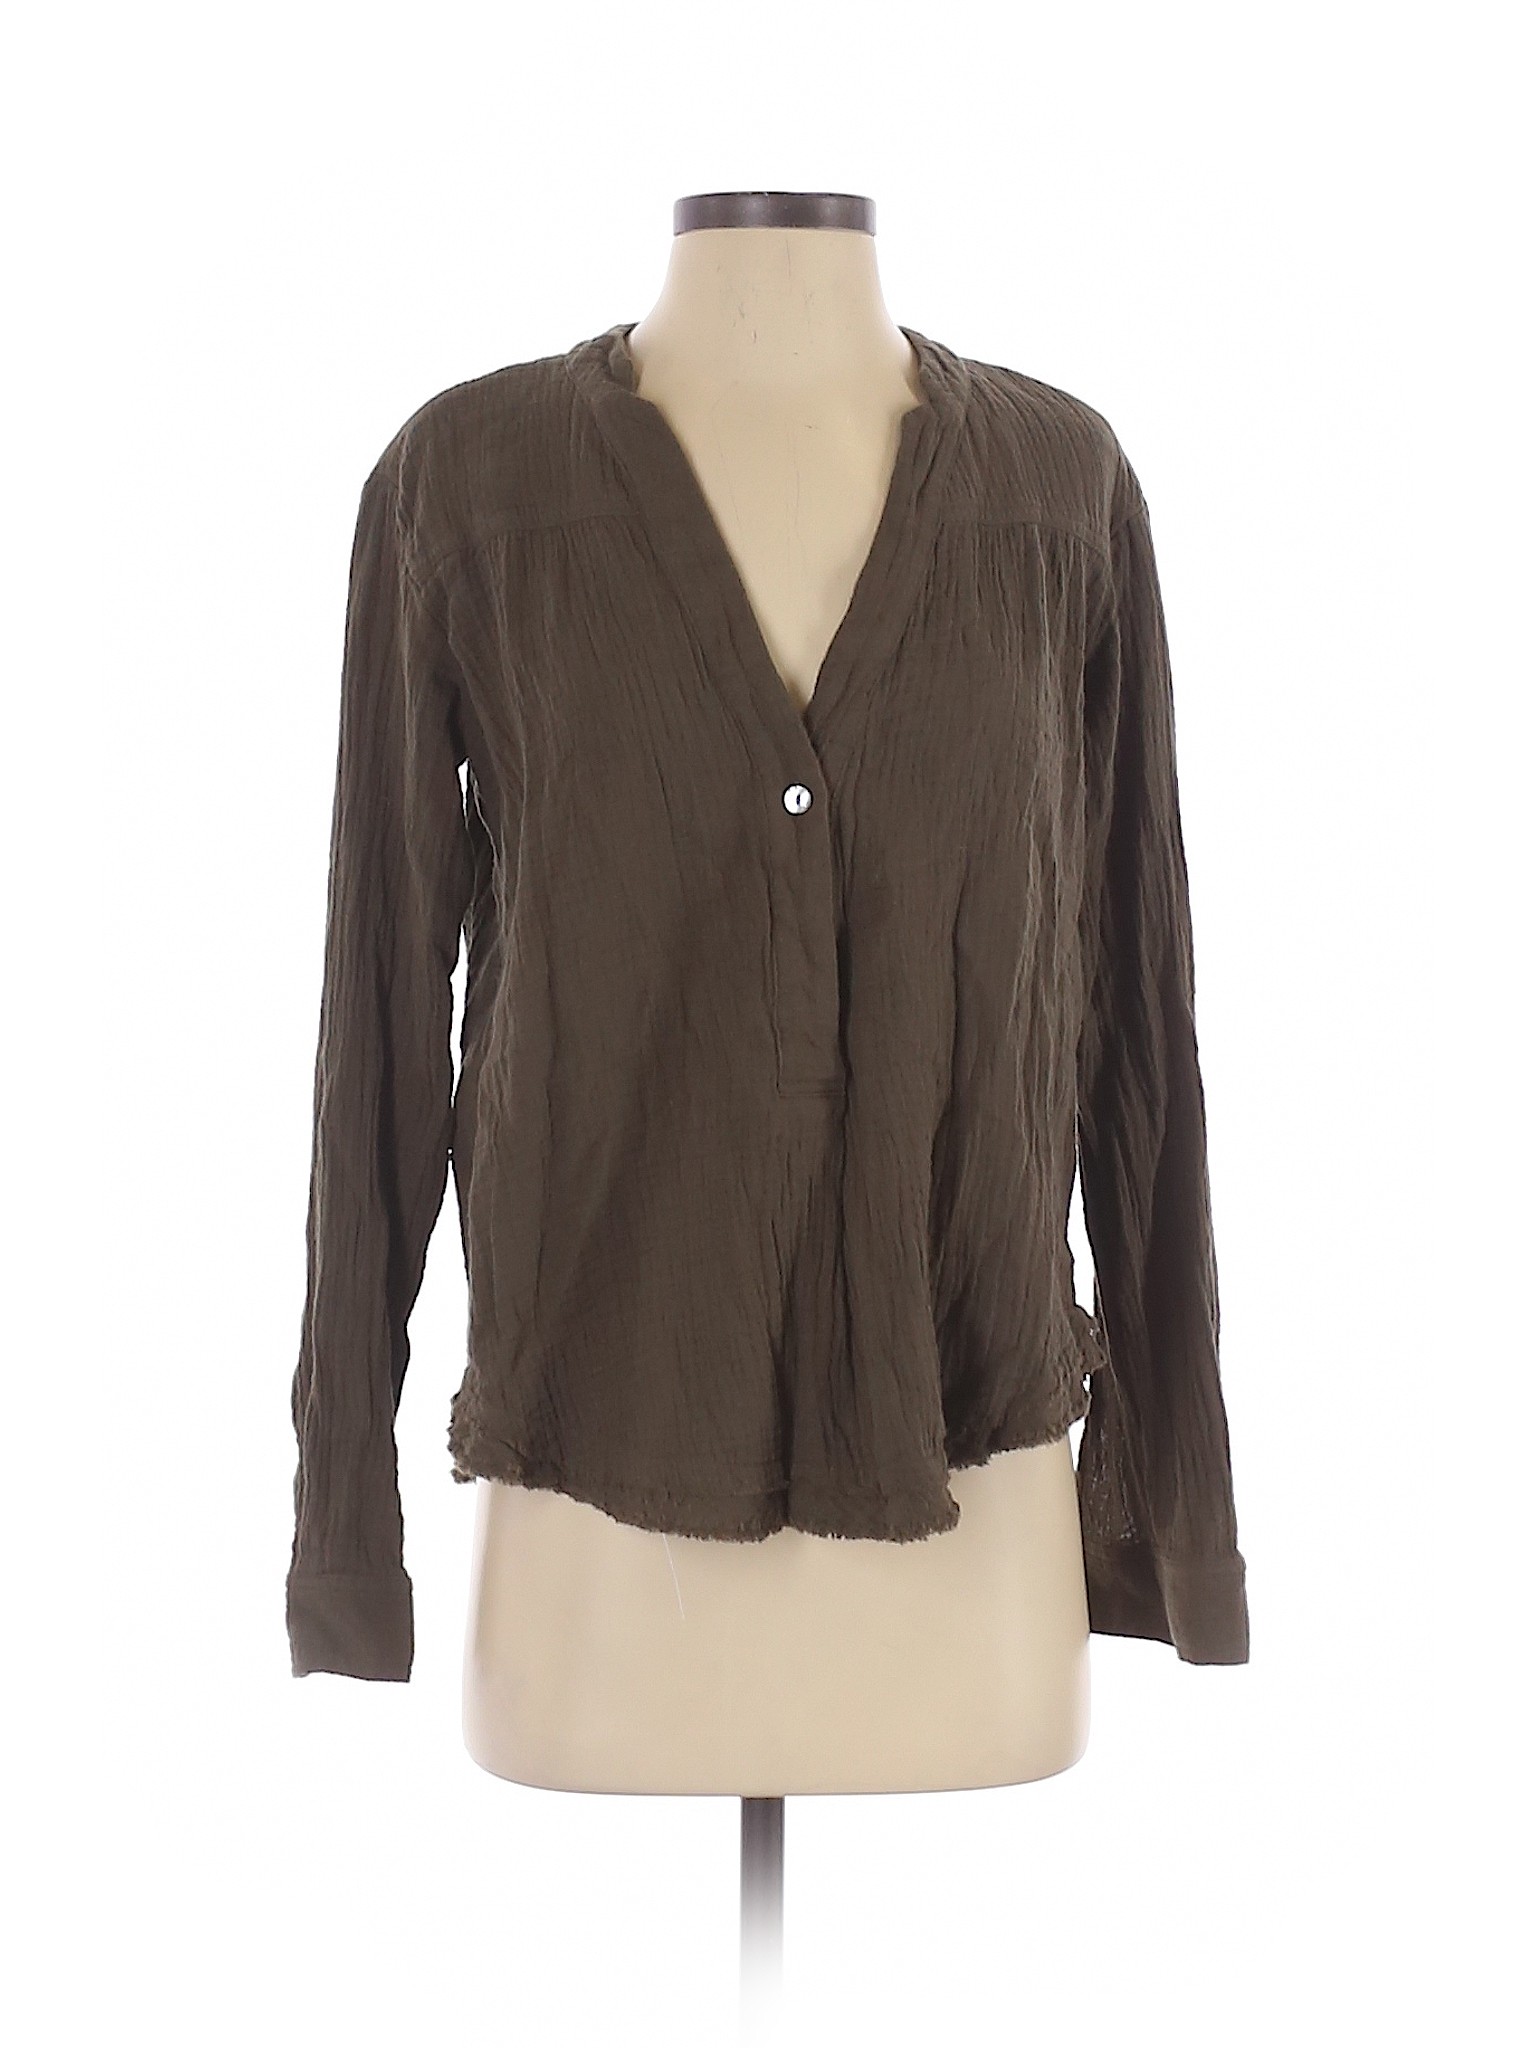 Free People Women Brown Long Sleeve Blouse XS | eBay